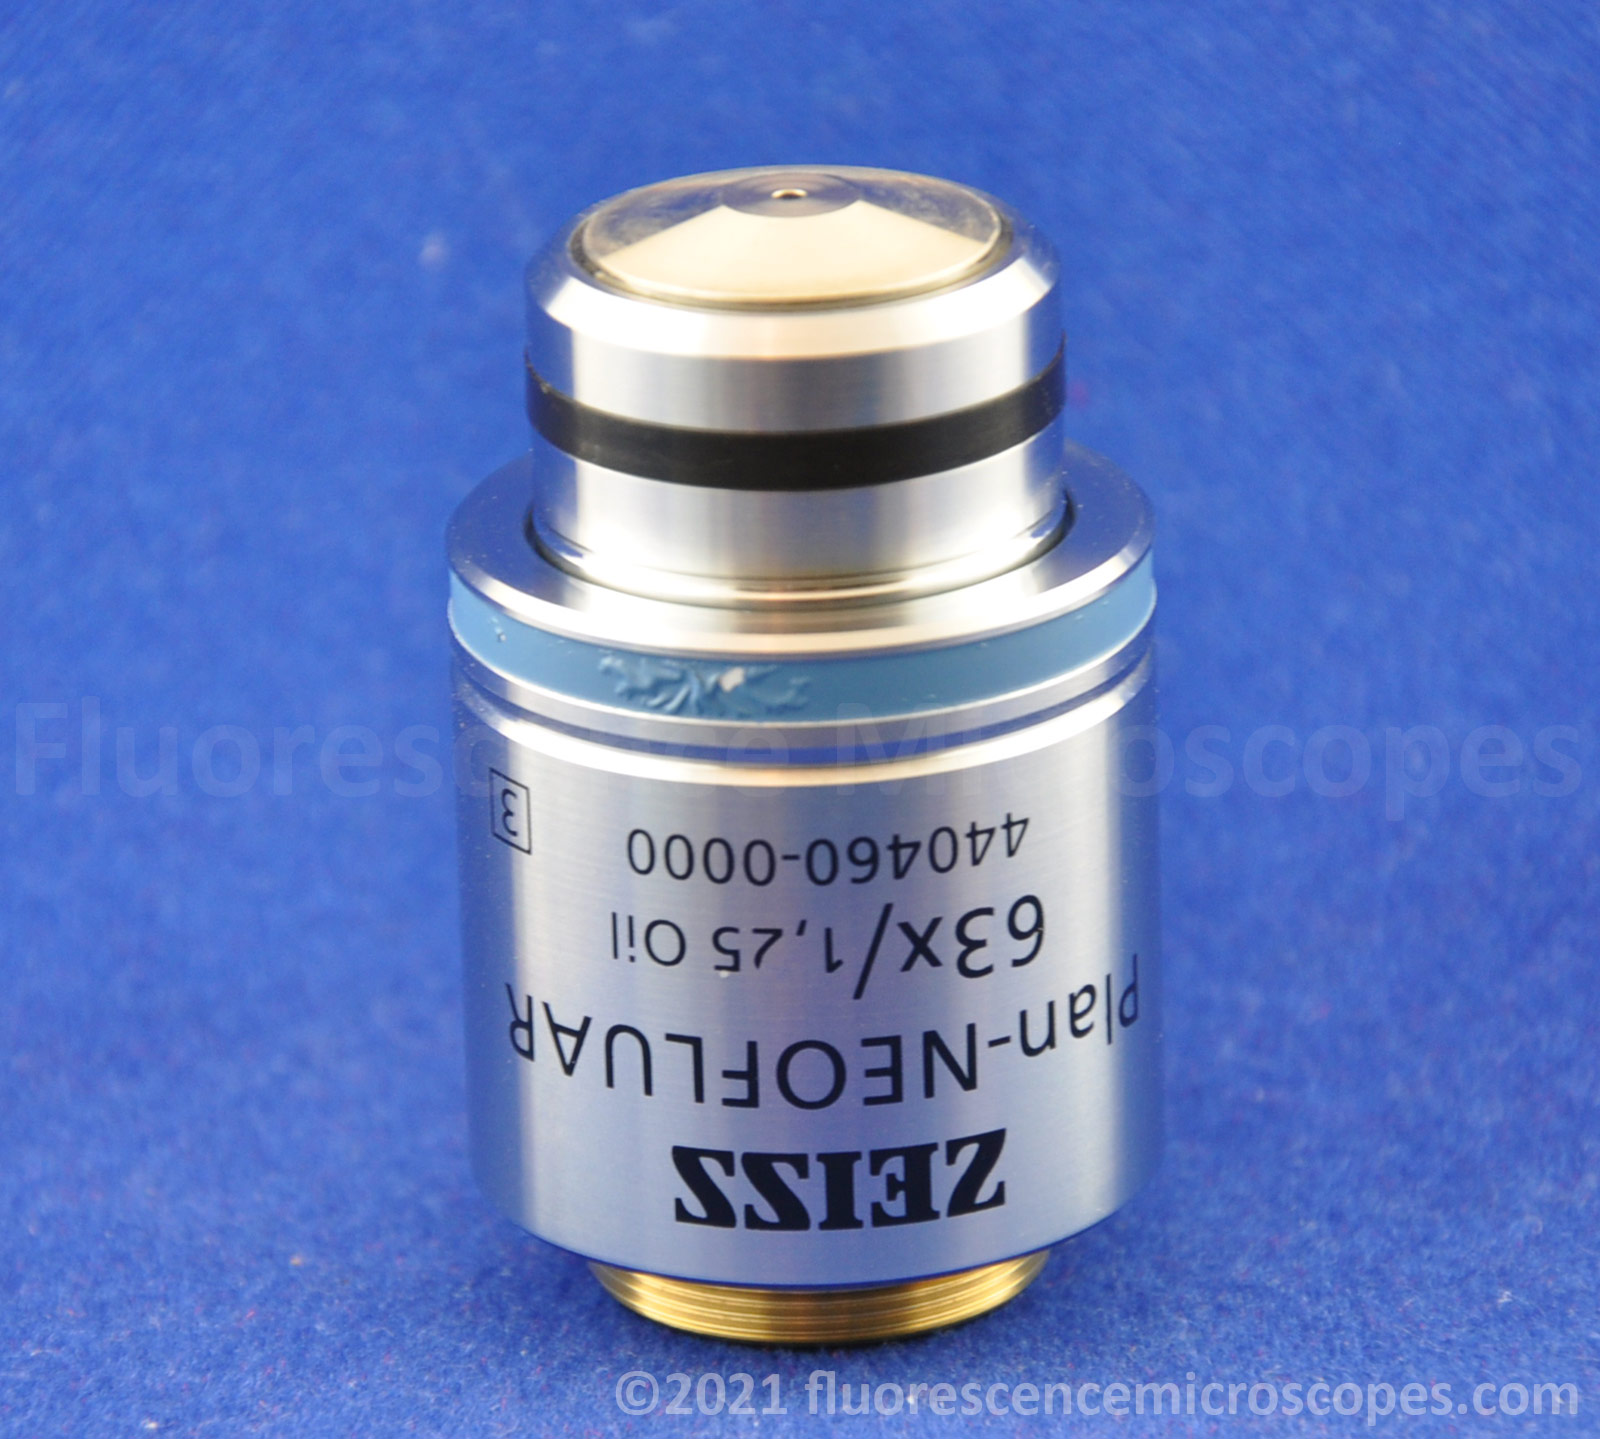 Zeiss Plan-Neofluar 63x / 1.25, ∞/0.17 Oil Microscope Objective